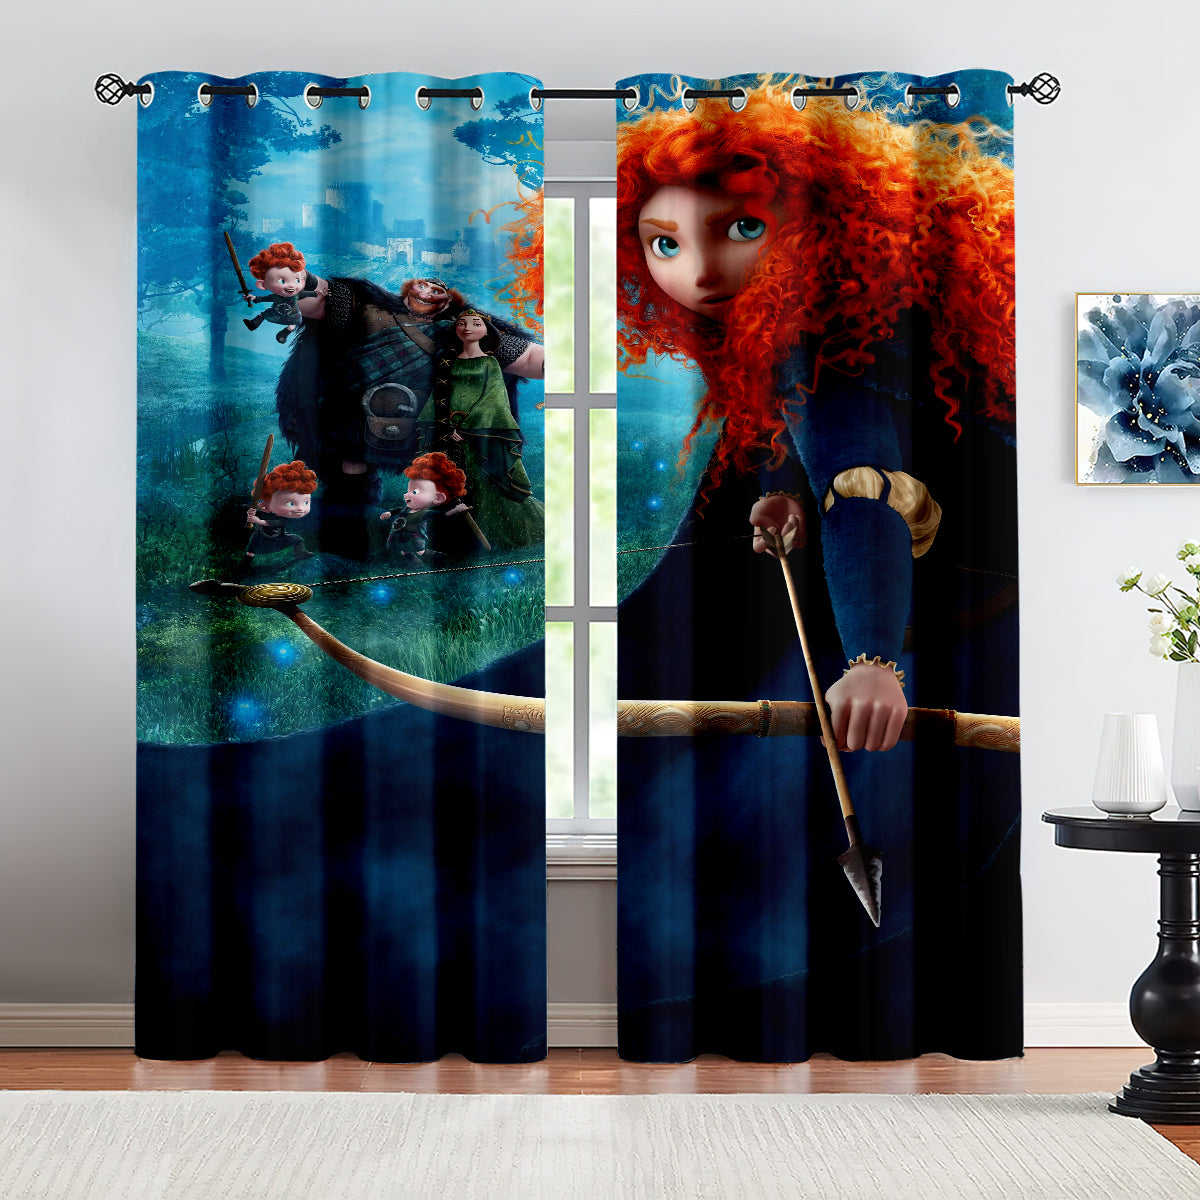 Disney Brave Princess Merida Curtains Blackout Window Treatments Drapes Room Decor